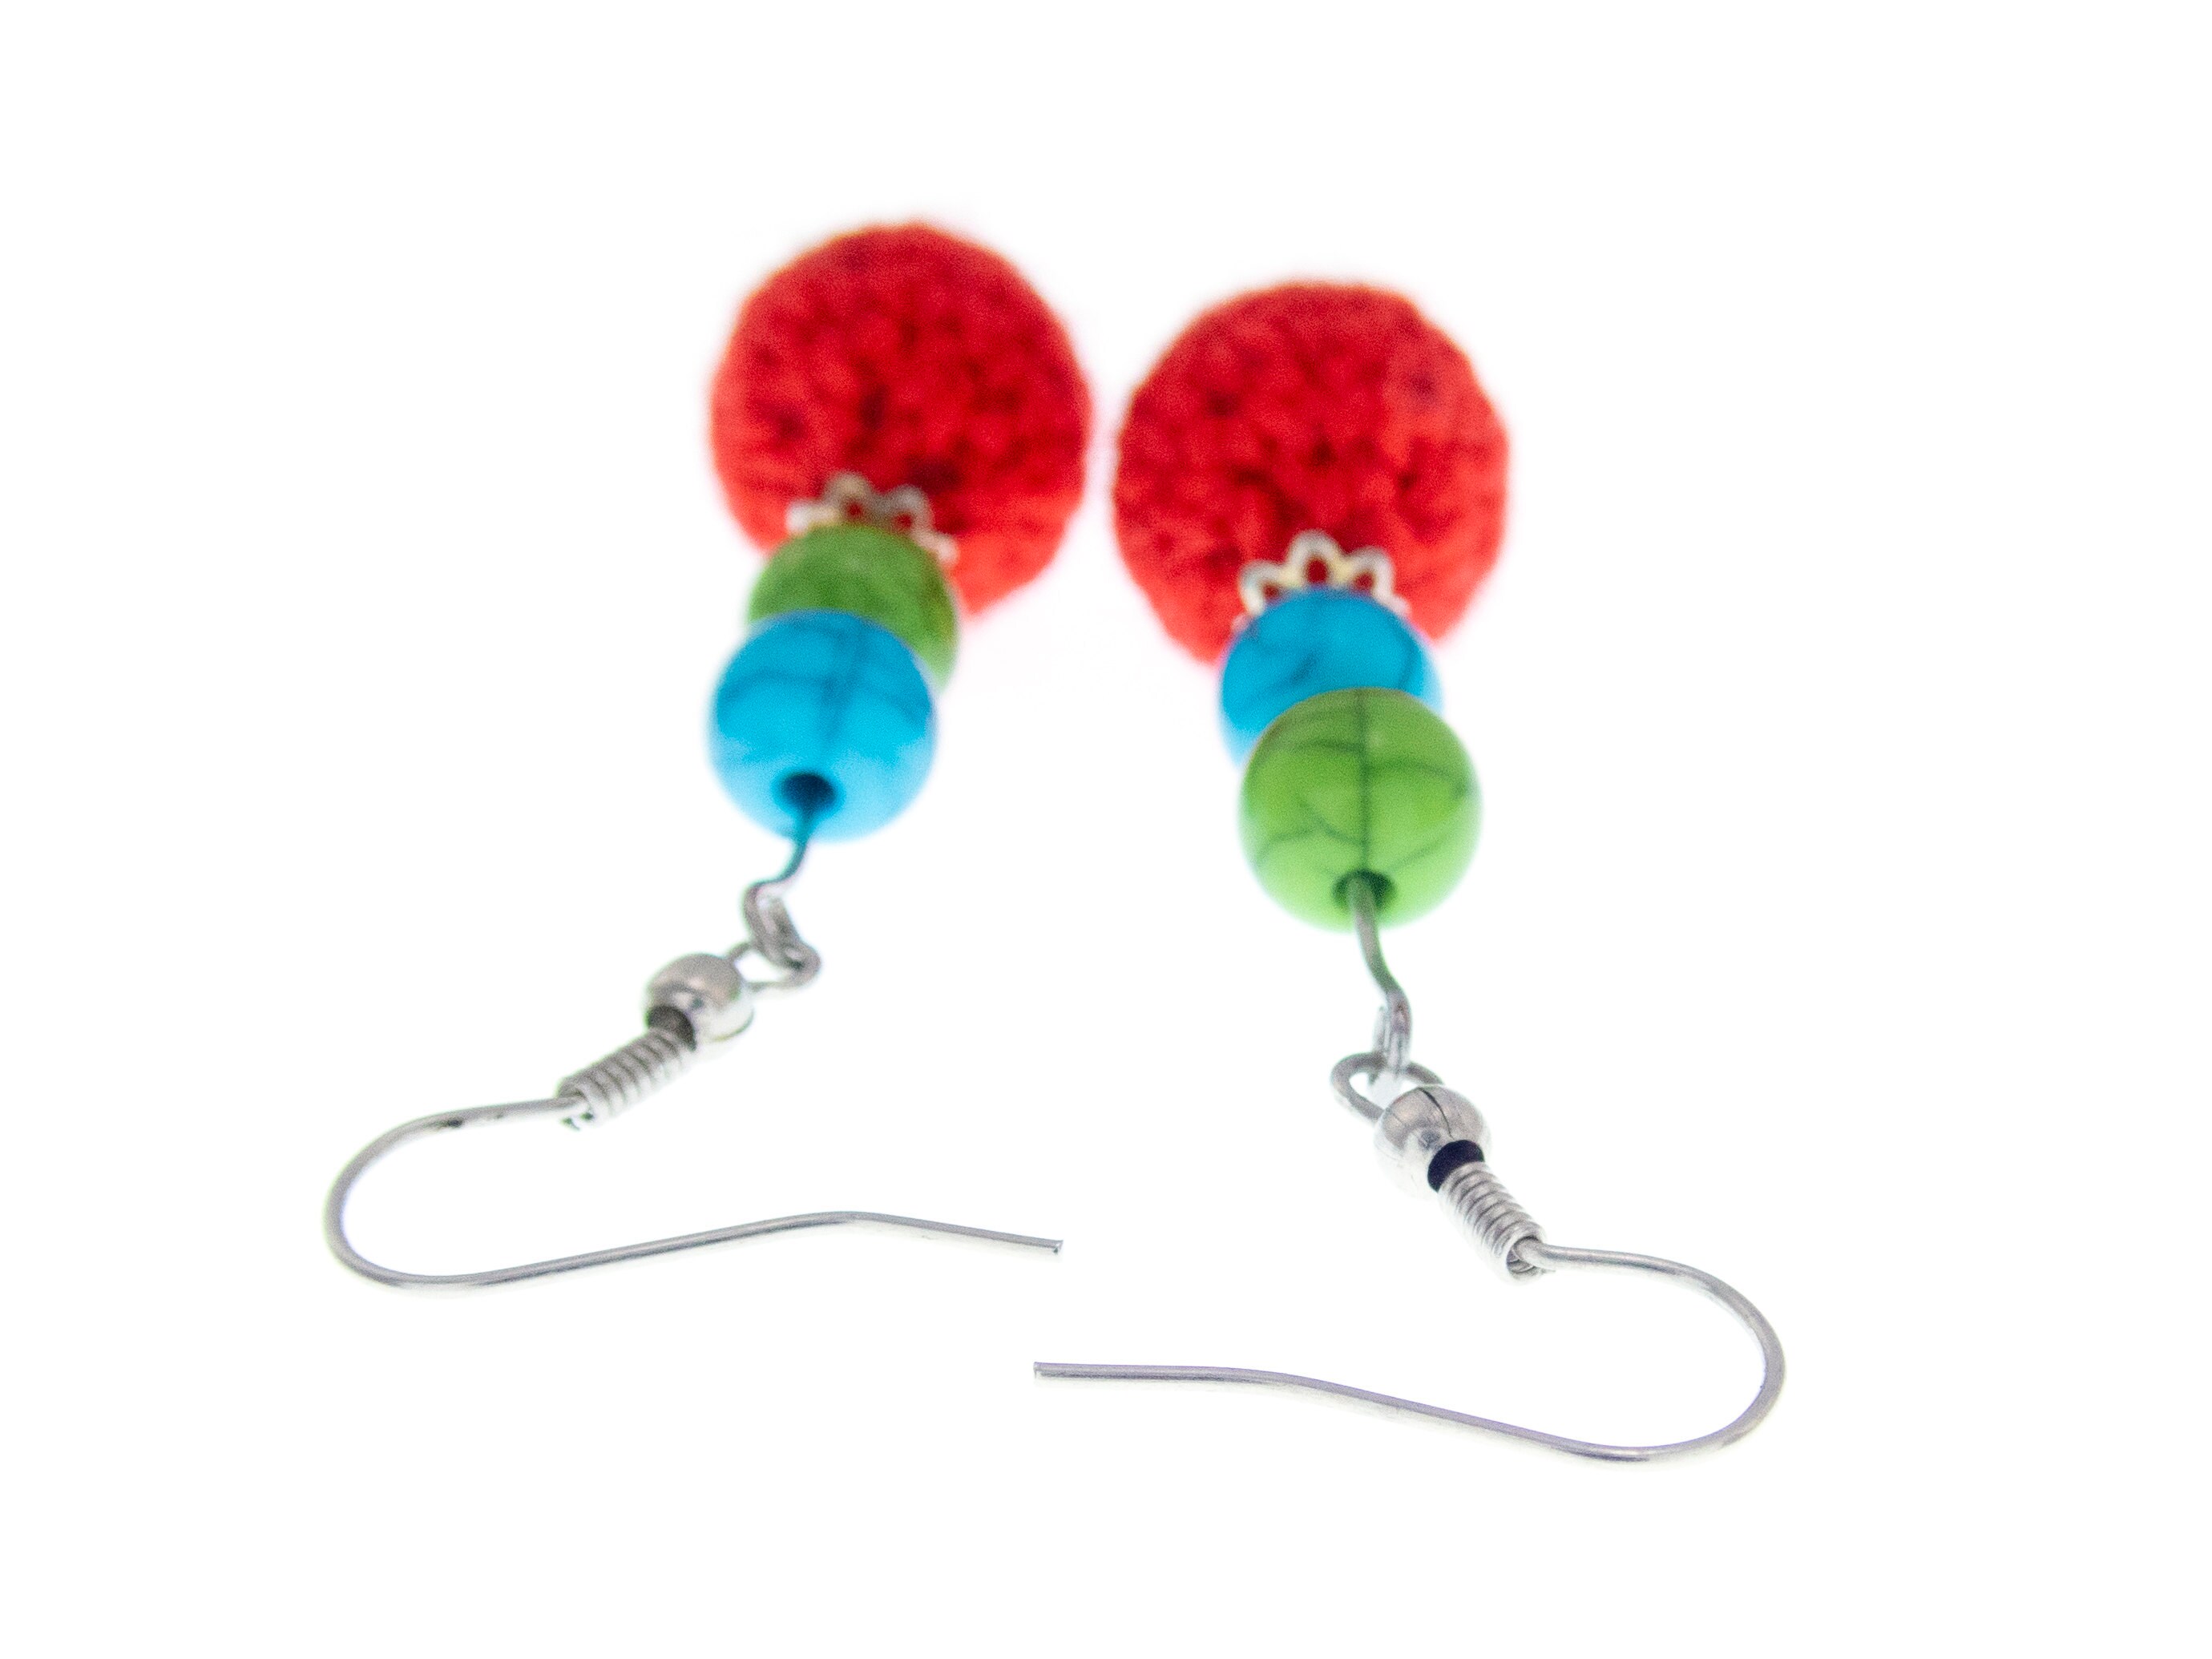 fashion statement earrings handmade of red, green, blue dangling balls